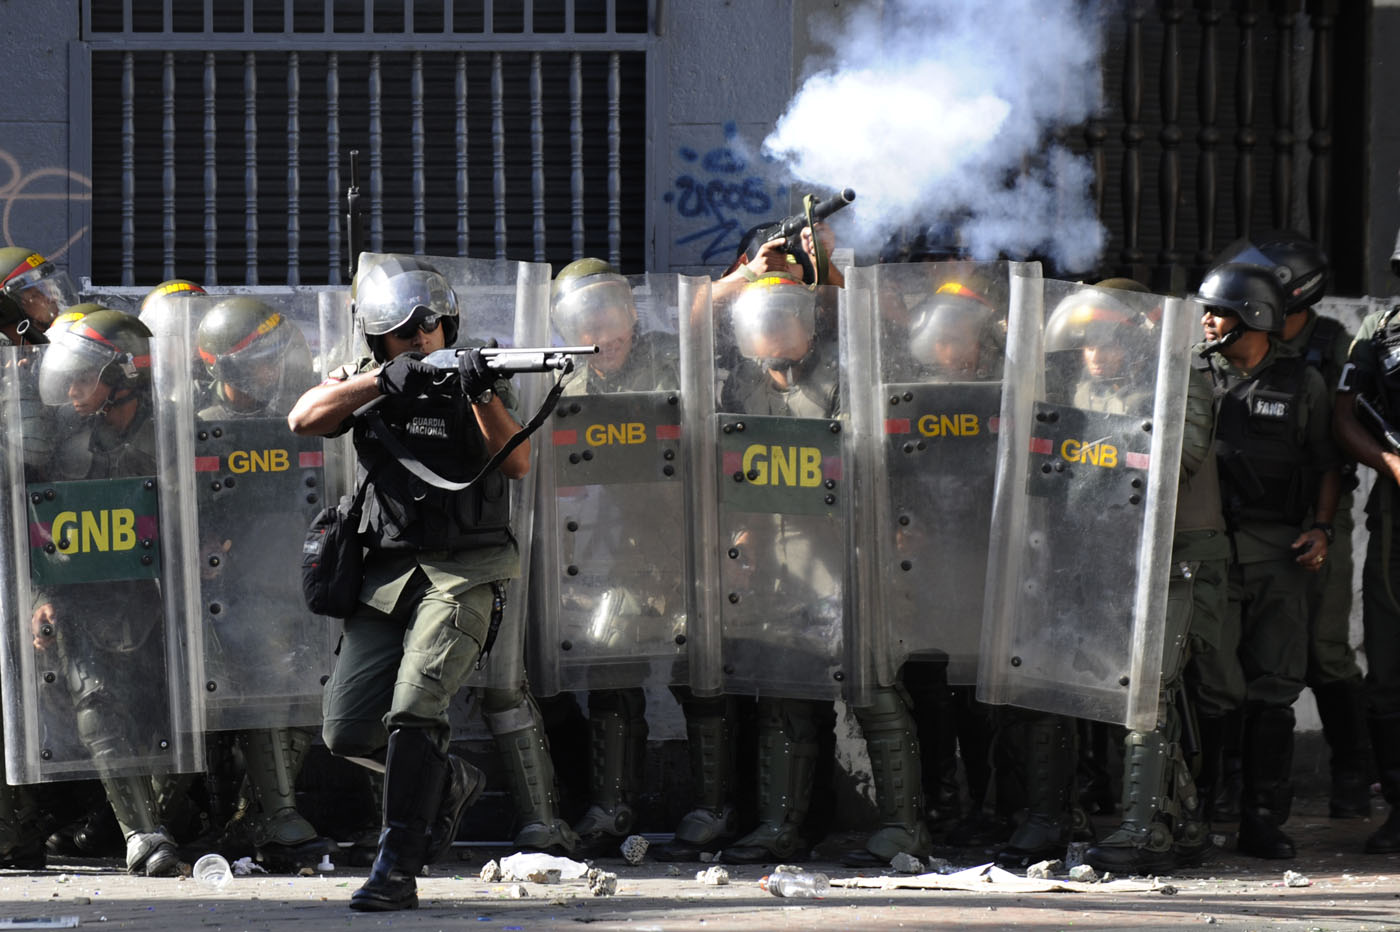 Marcharán hasta destacamentos de la GNB para pedir cese de represión (Video)